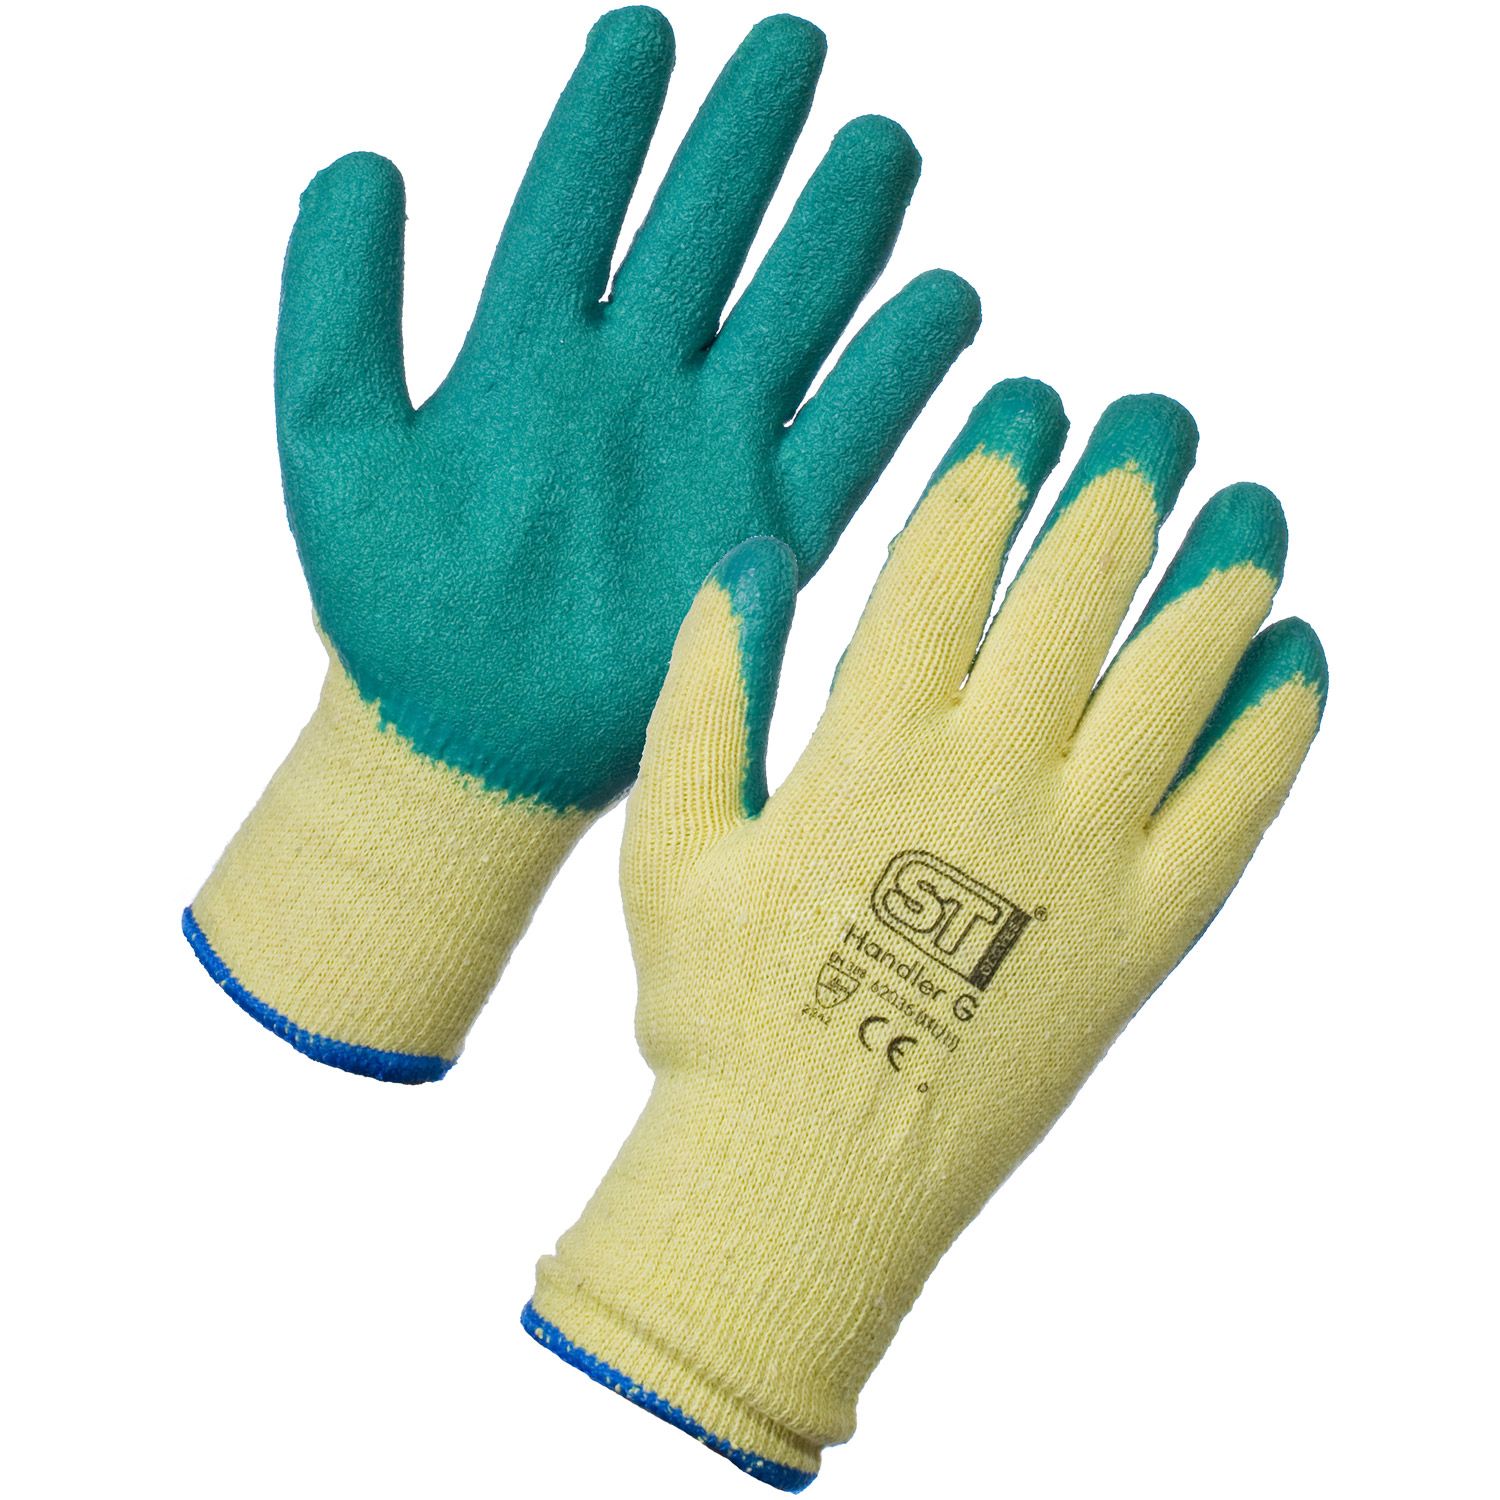 General Handler glove Latex coated (Green) - S - 12 Pack